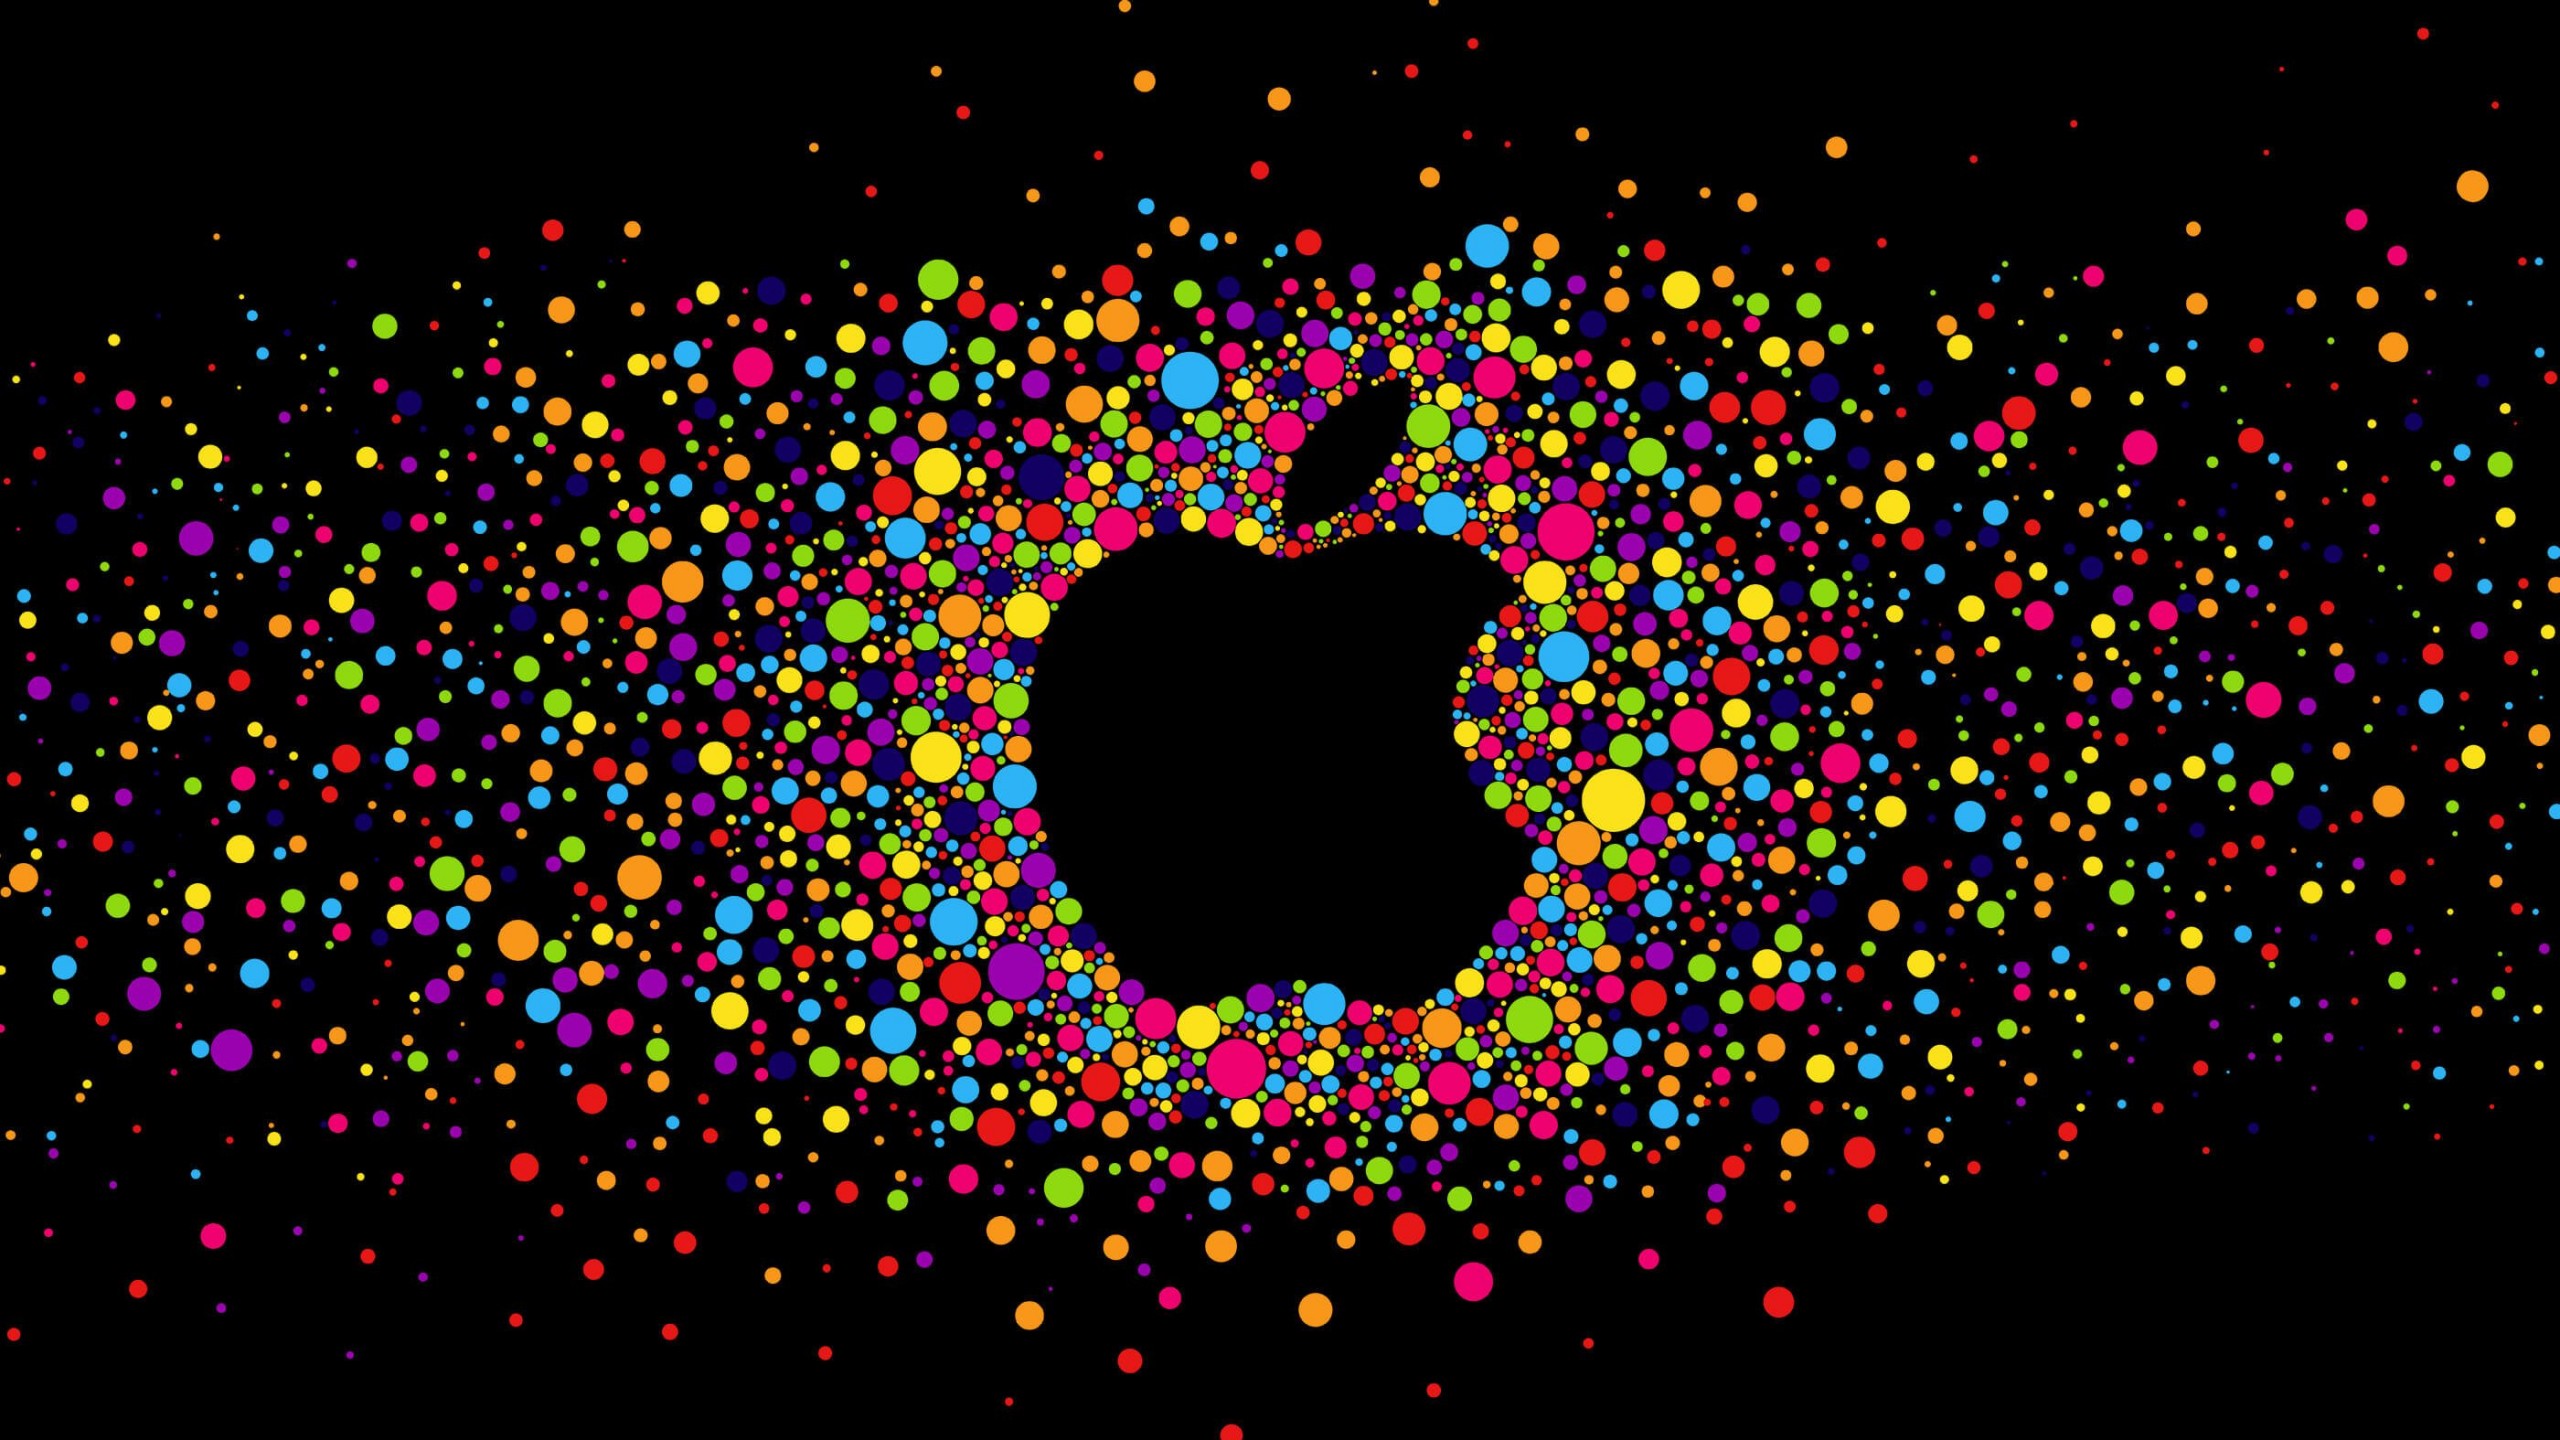 Black Apple Logo Particles Wallpaper for Social Media YouTube Channel Art